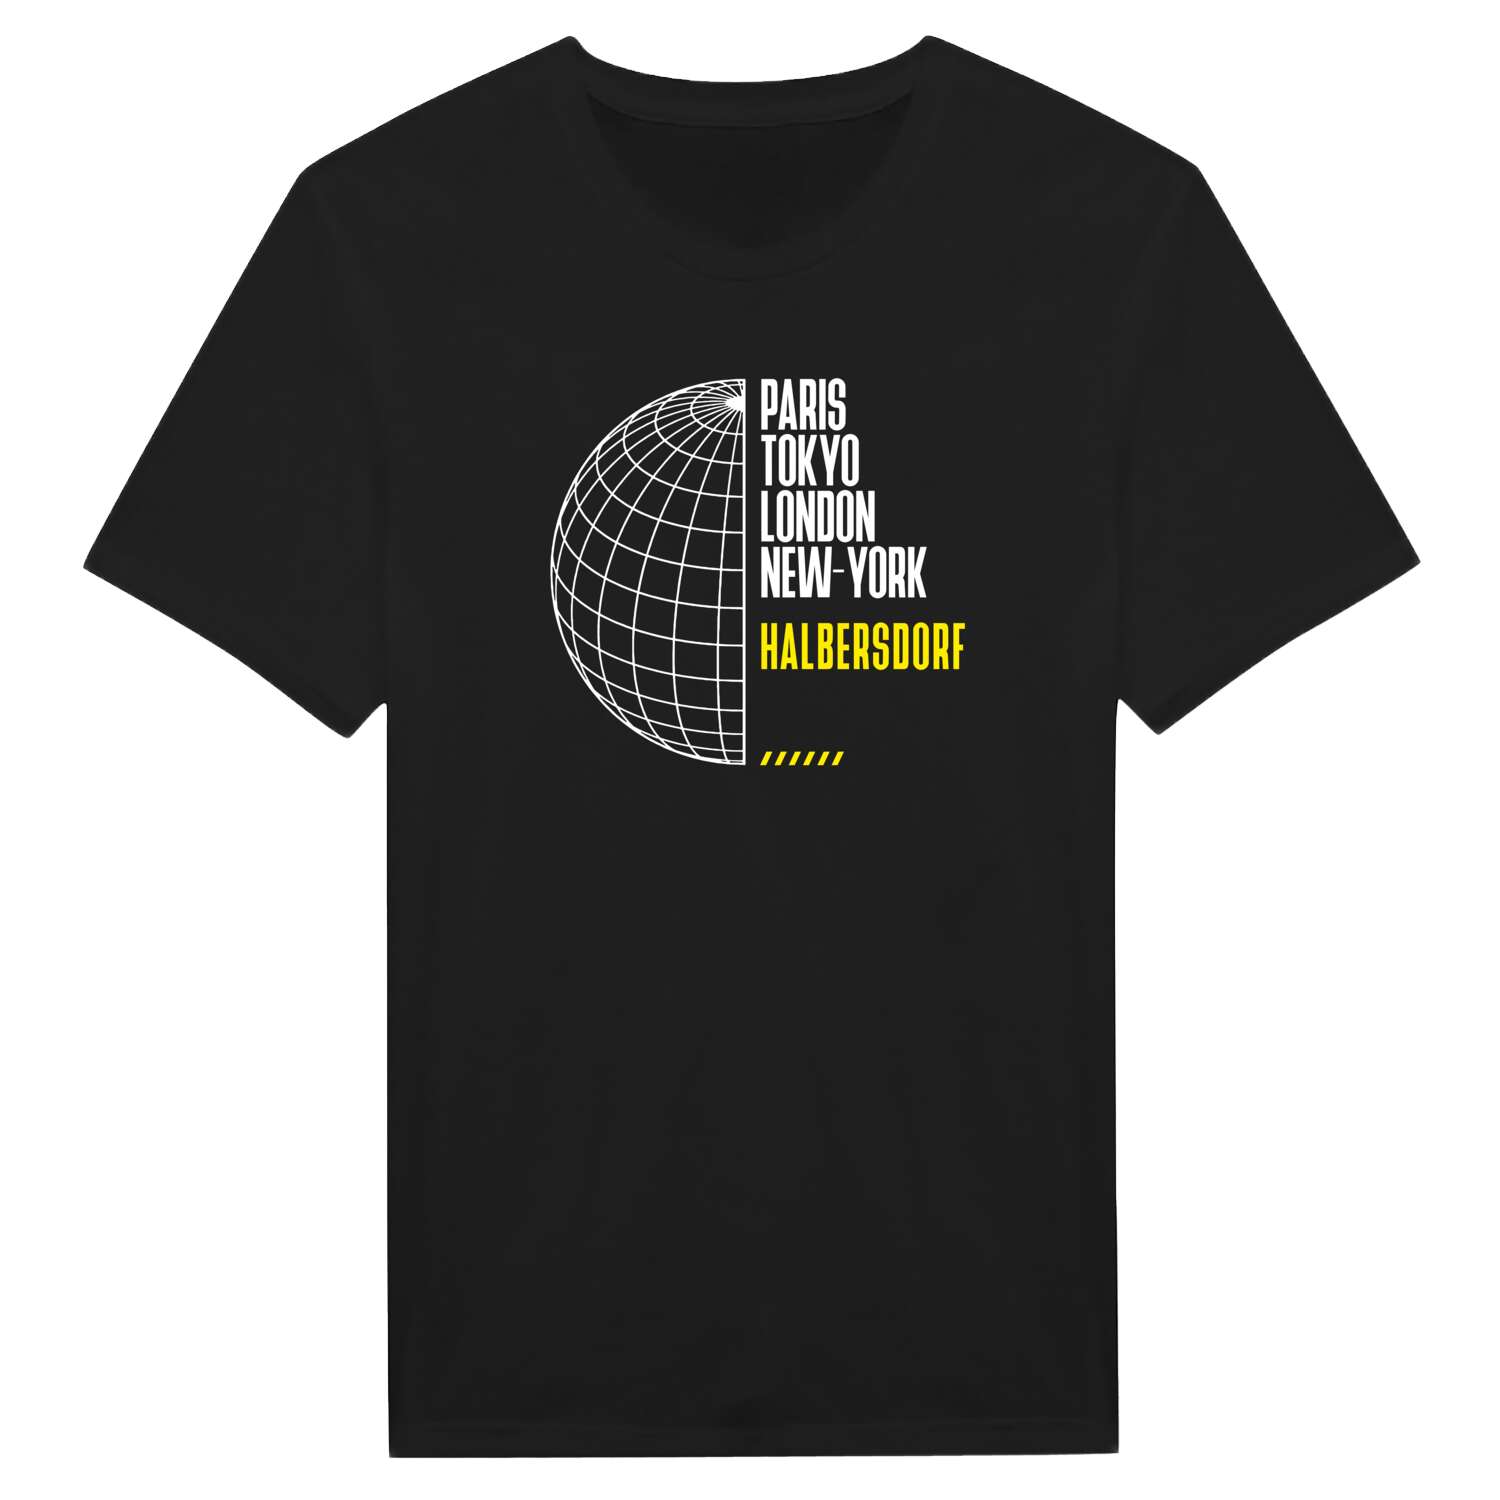 Halbersdorf T-Shirt »Paris Tokyo London«